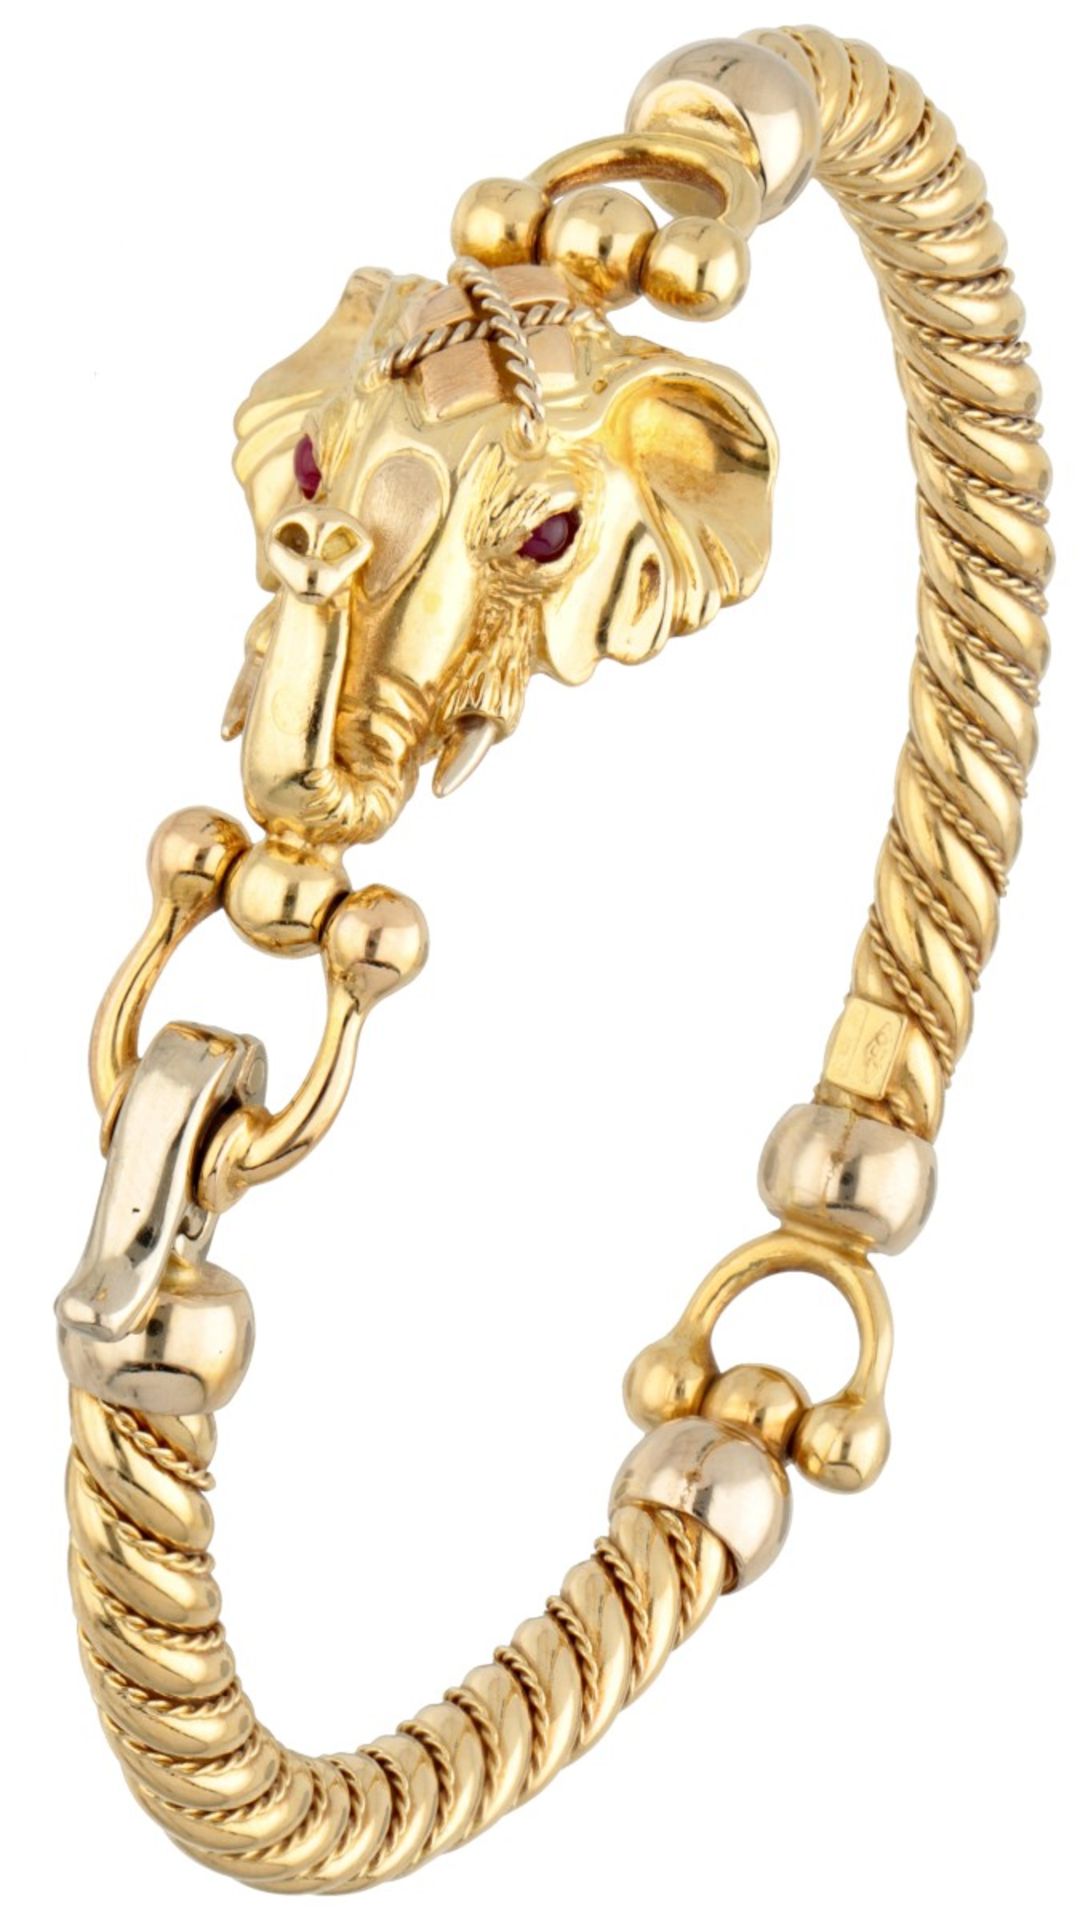 Vintage 18K. yellow gold bangle bracelet depicting an elephant head set with rubies.